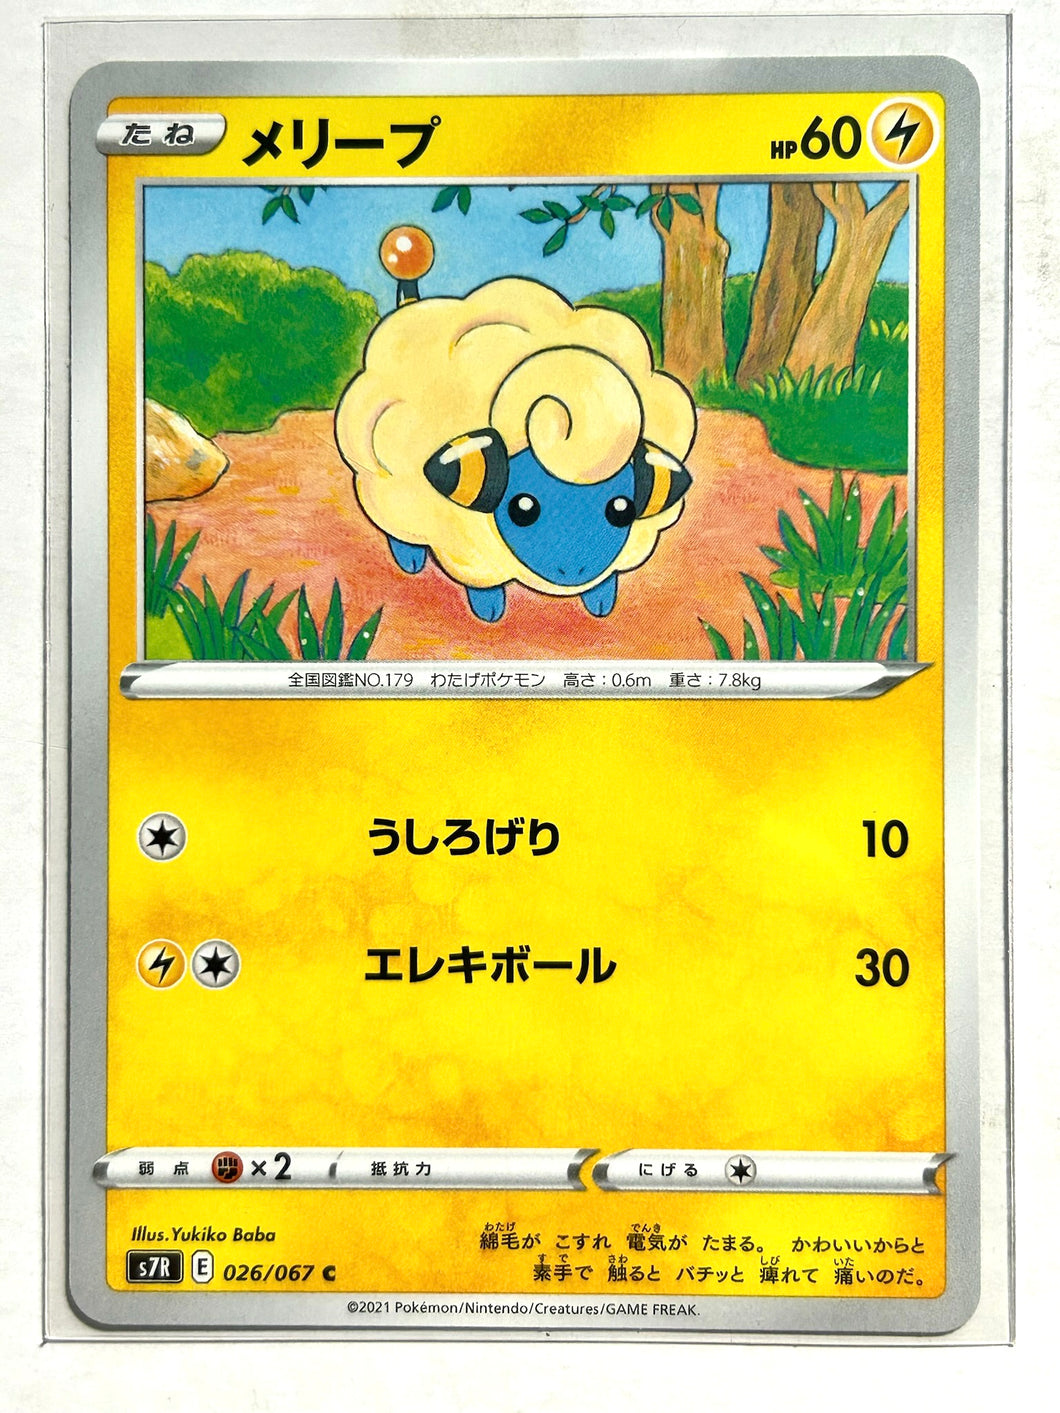 Pokémon Sword & Shield Blue Sky Stream - Mareep - s7R 026/067 C - Common